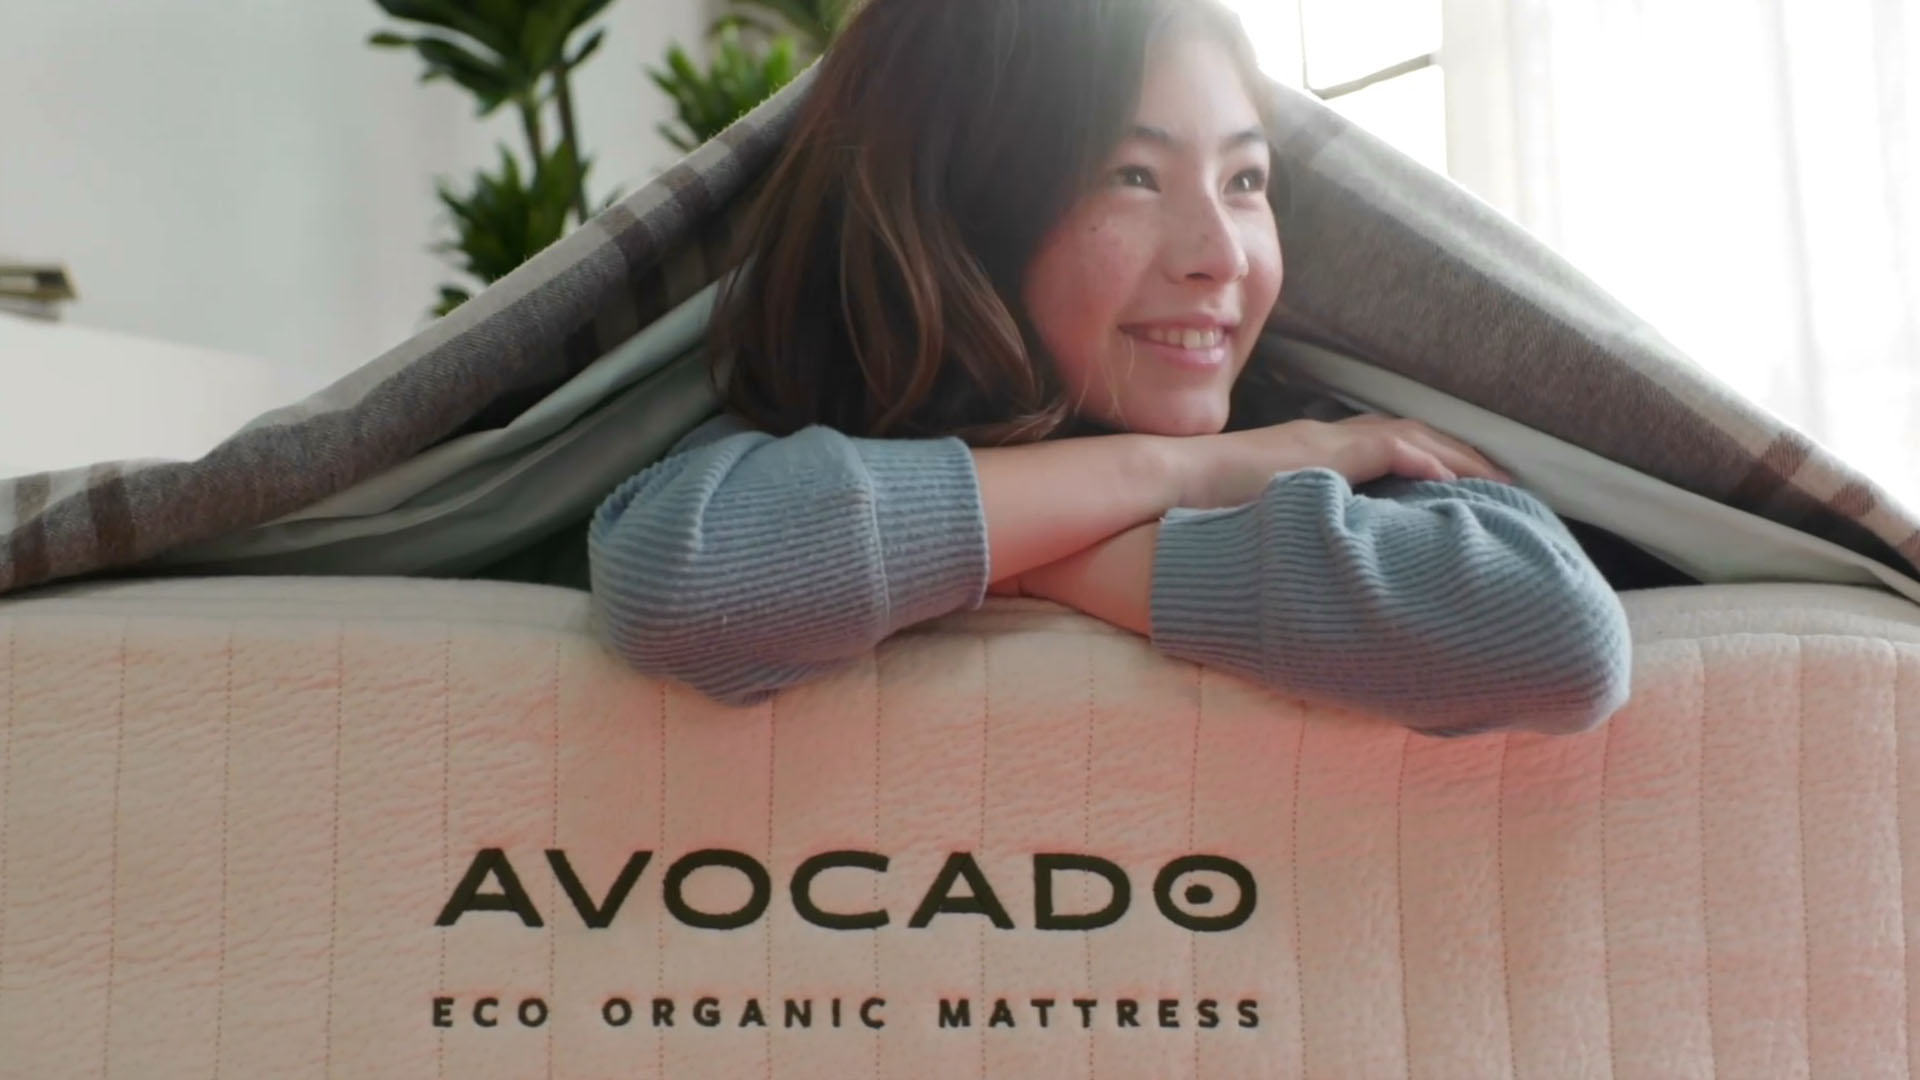 Who sells Avocado mattress near me in Cape Girardeau